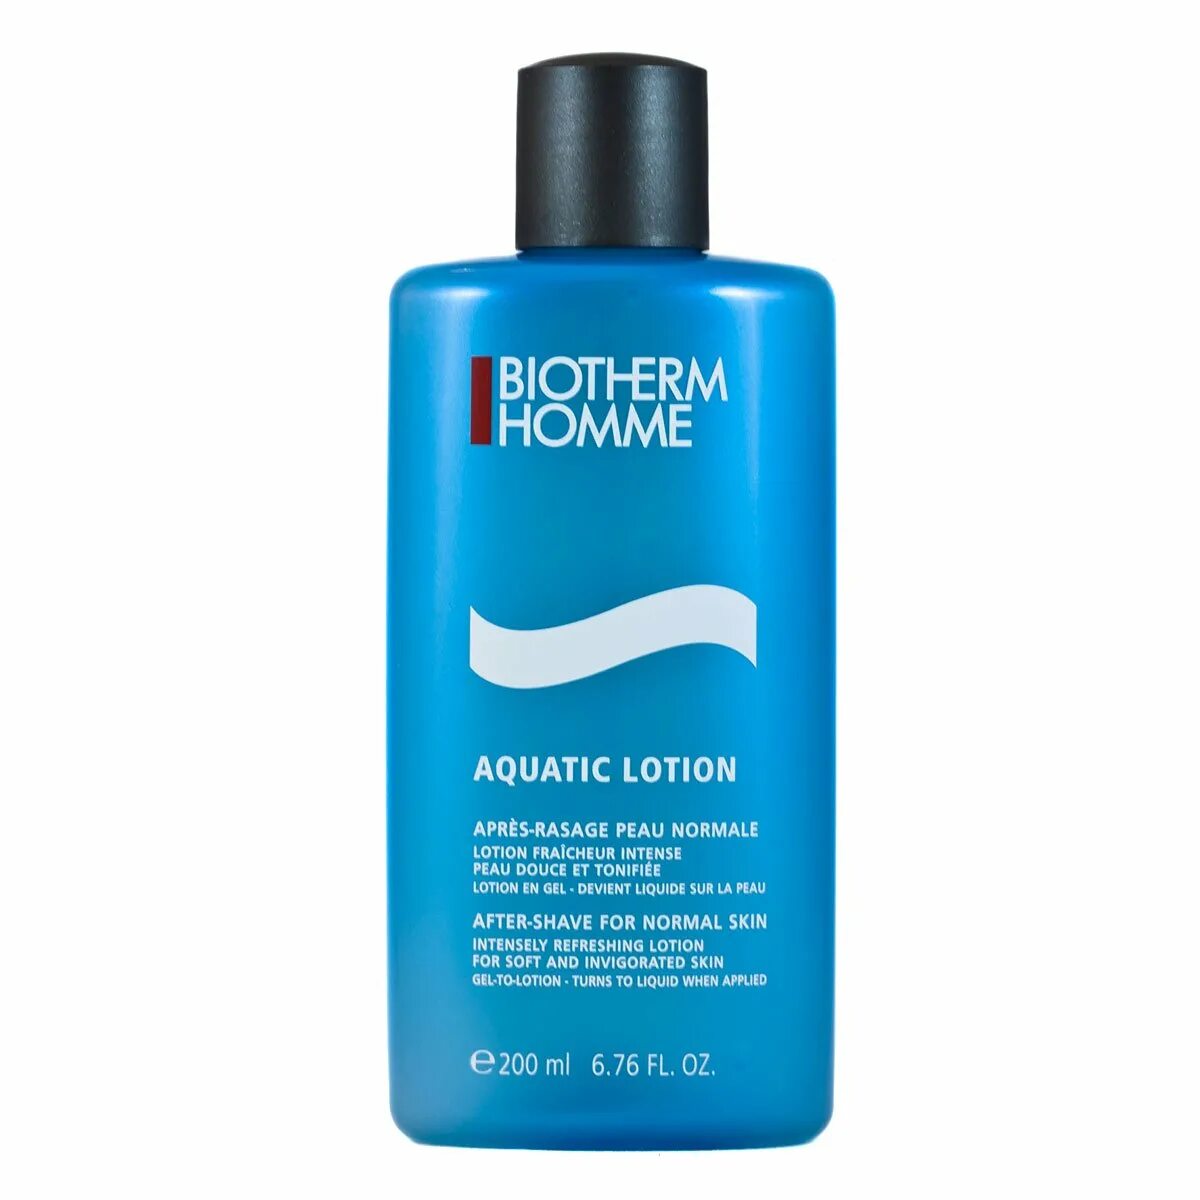 Biotherm homme Aquatic Lotion. Biotherm лосьон после бритья. Biotherm homme after Shave Lotion. Biotherm homme Balm.